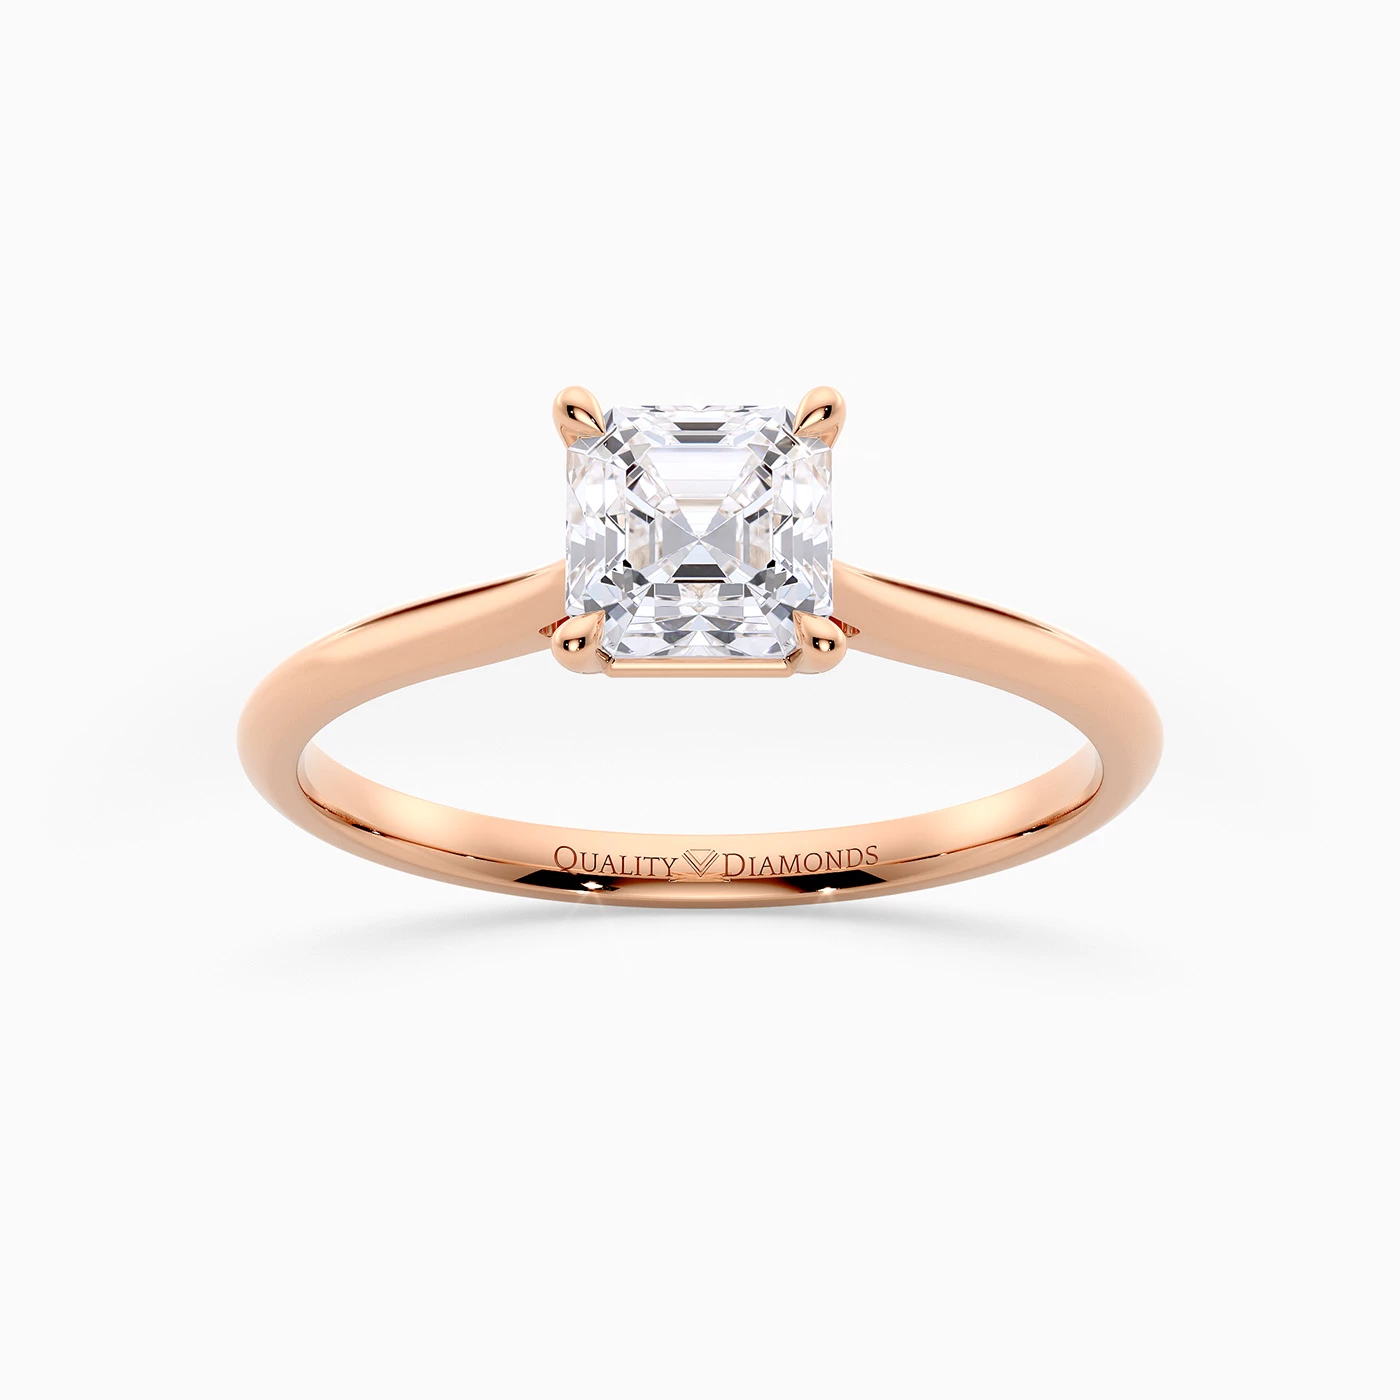 Asscher Carys Diamond Ring in 9K Rose Gold